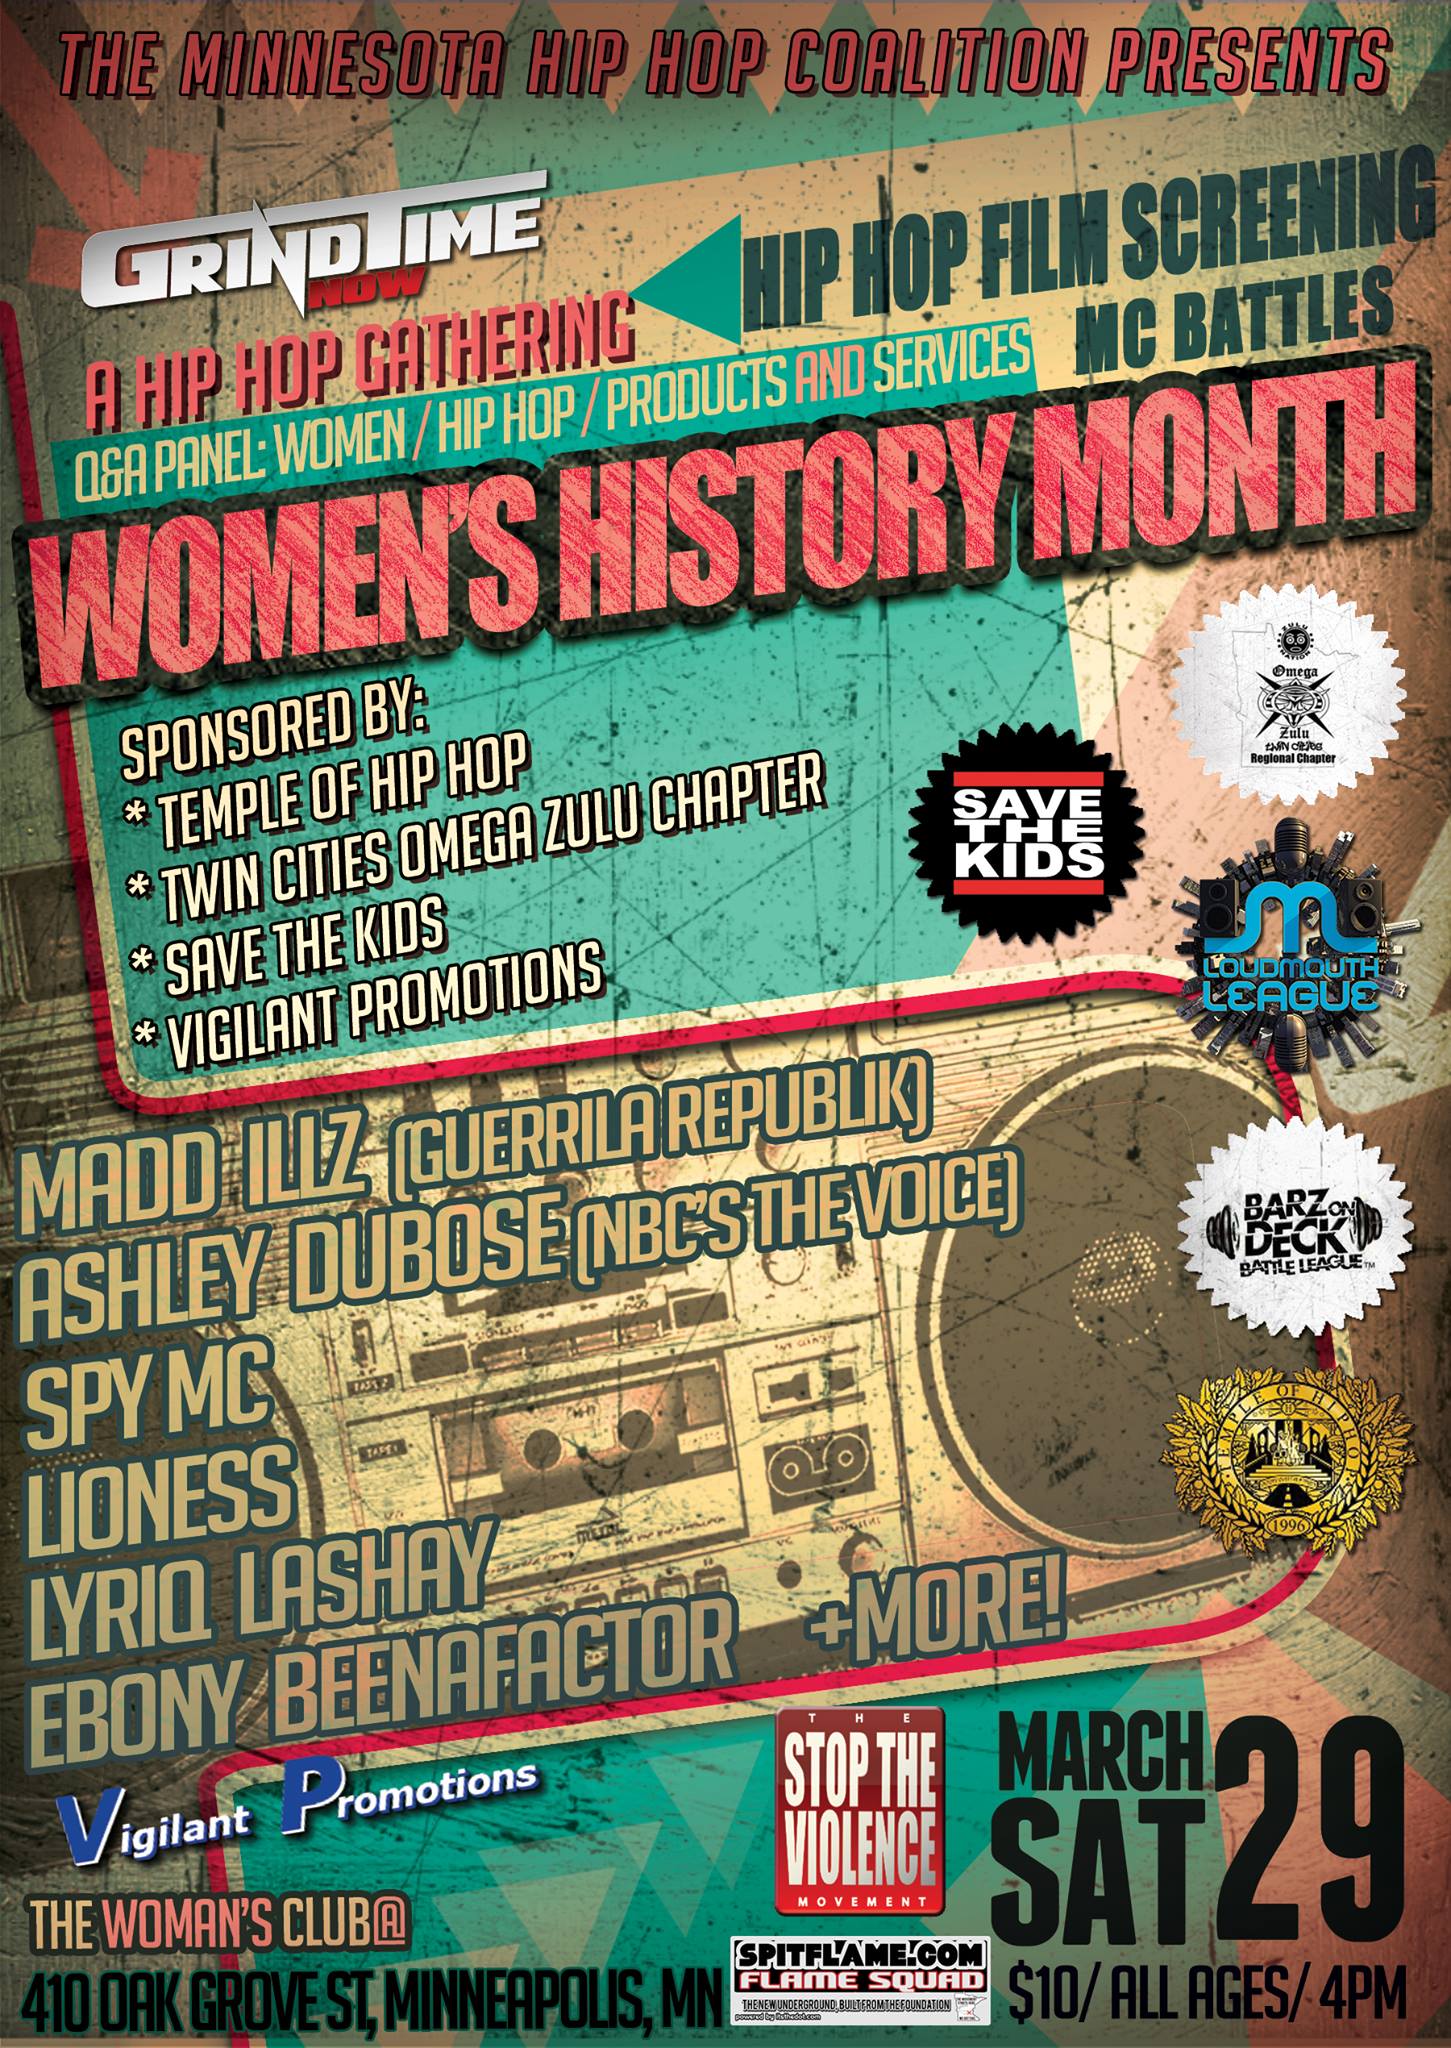 Twin Cities Women’s Hip Hop History Event